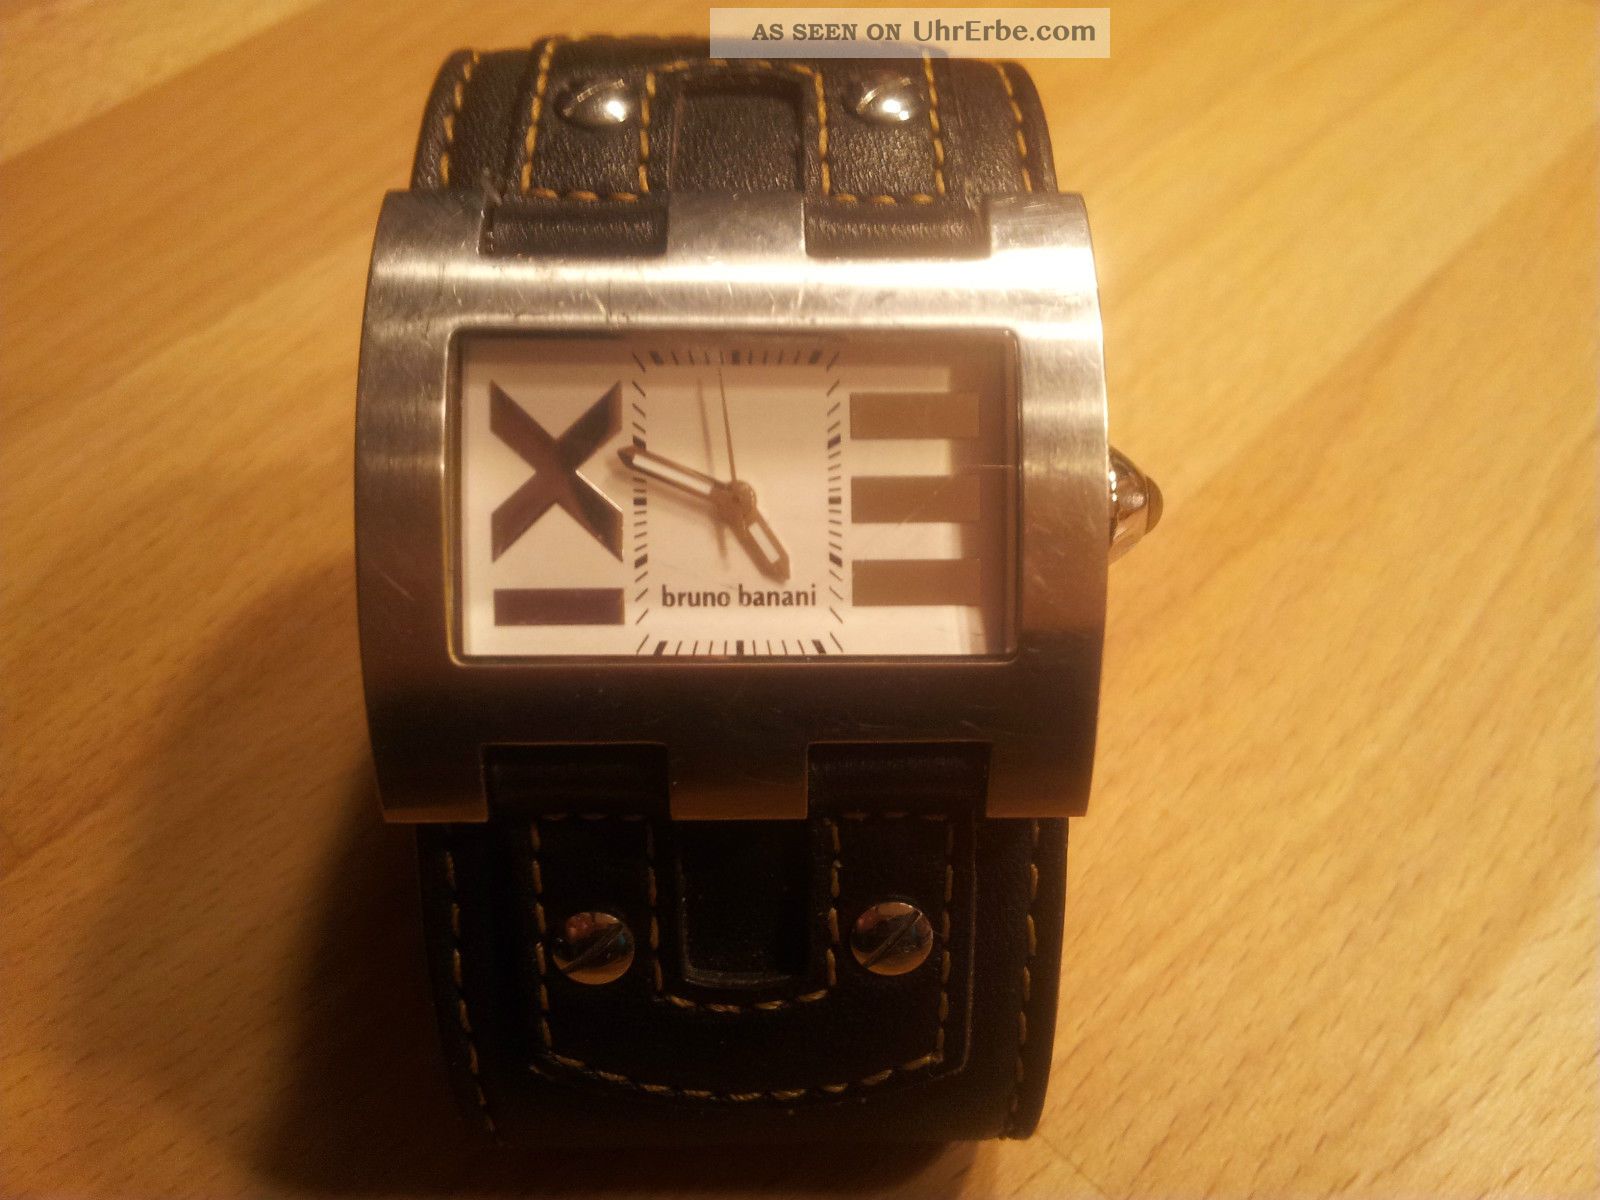 Bruno Banani Echtleder Armbanduhr Armbanduhren Bild